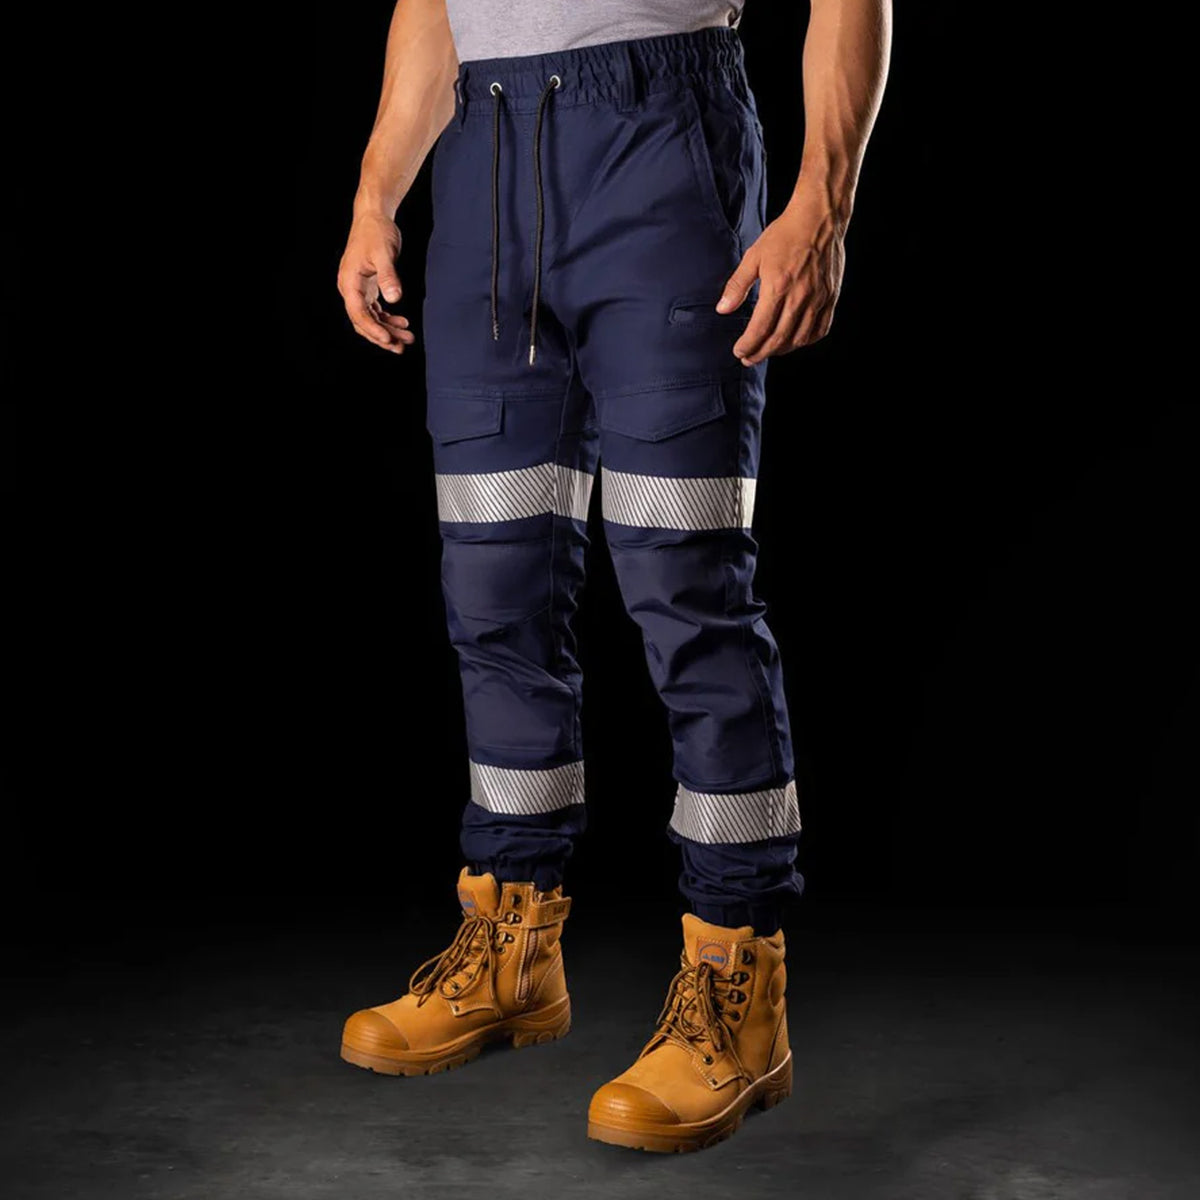 bad workwear saviour elastic waist cuffed work pants with tape in navy